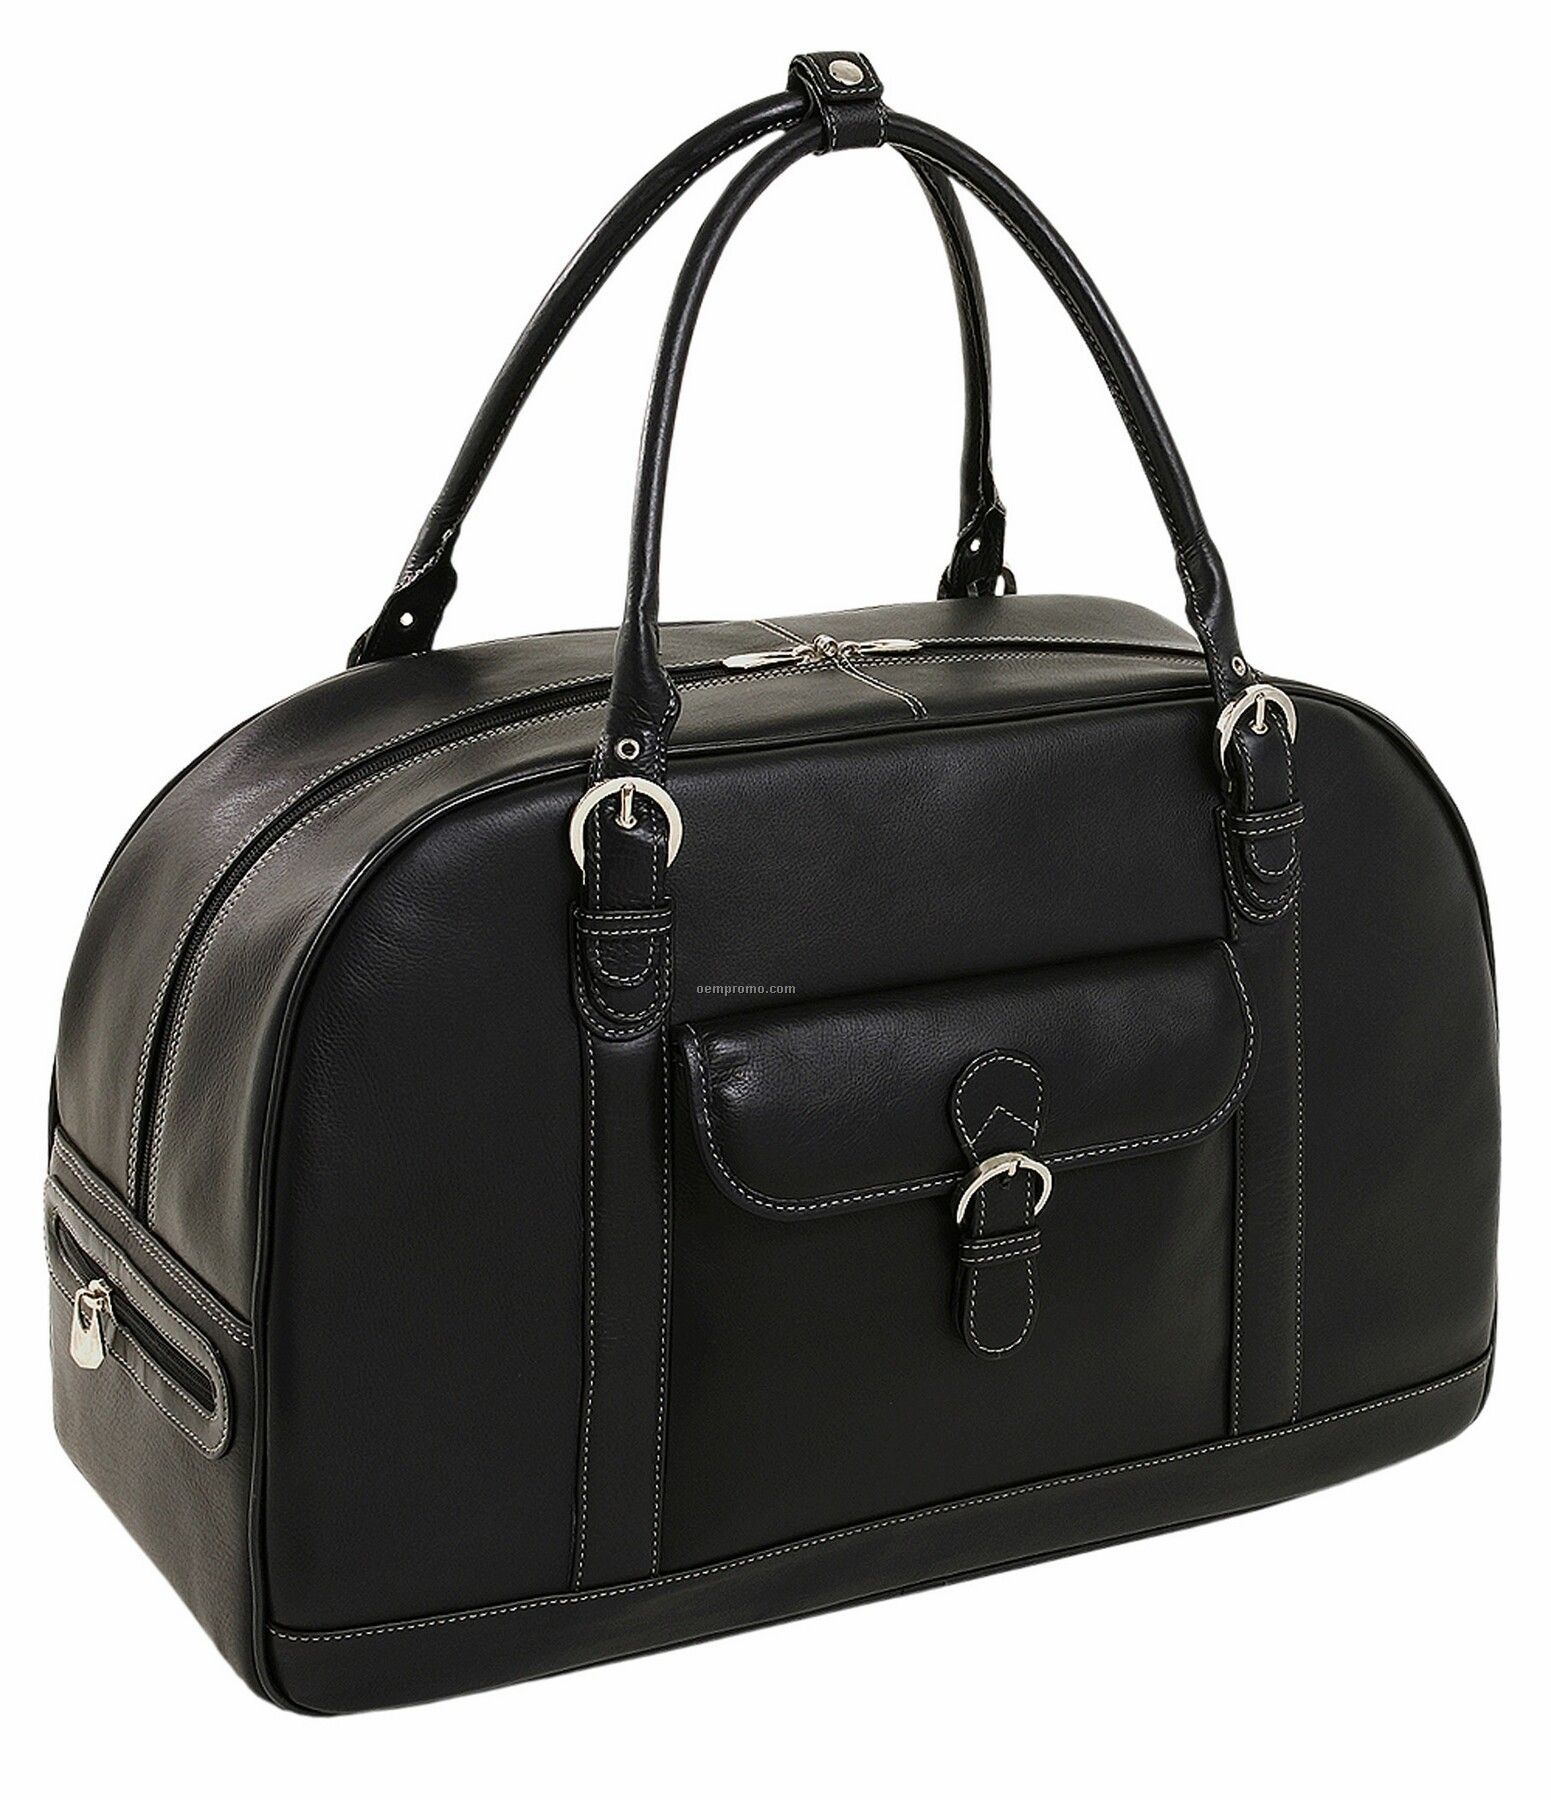 Stalla Leather Duffel Bag - Black